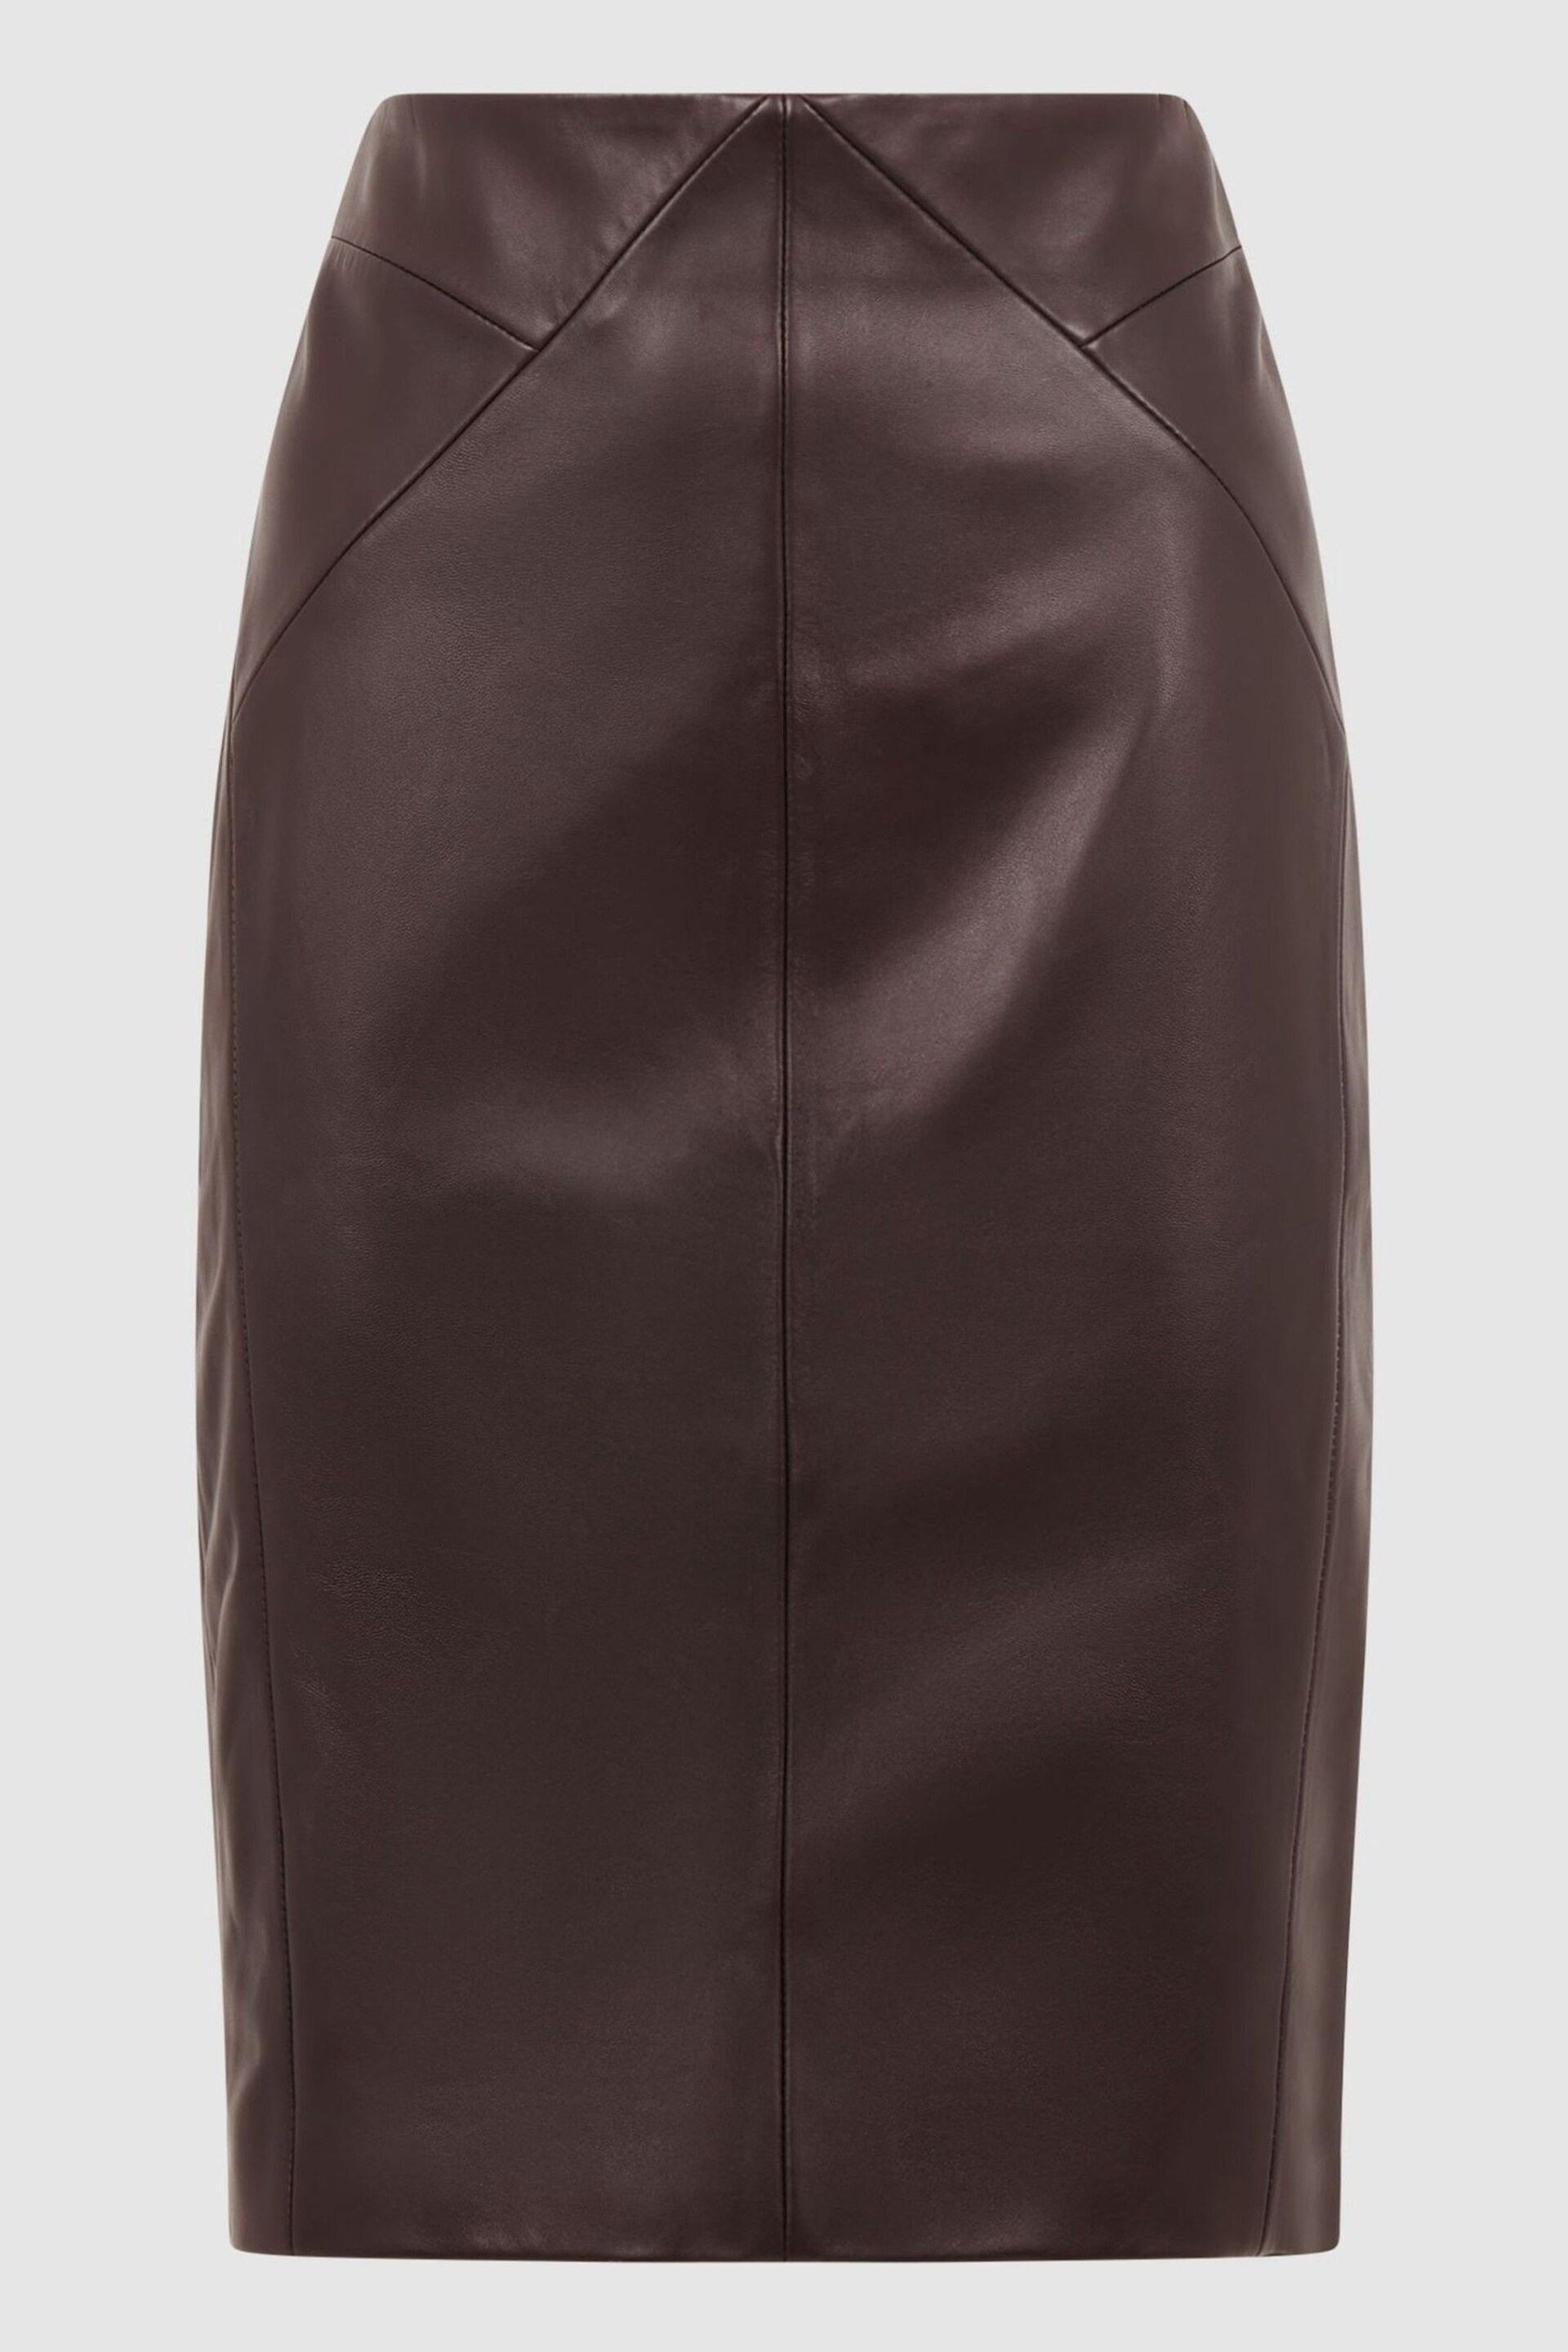 Reiss Berry Raya Leather High Rise Midi Skirt - Image 2 of 5